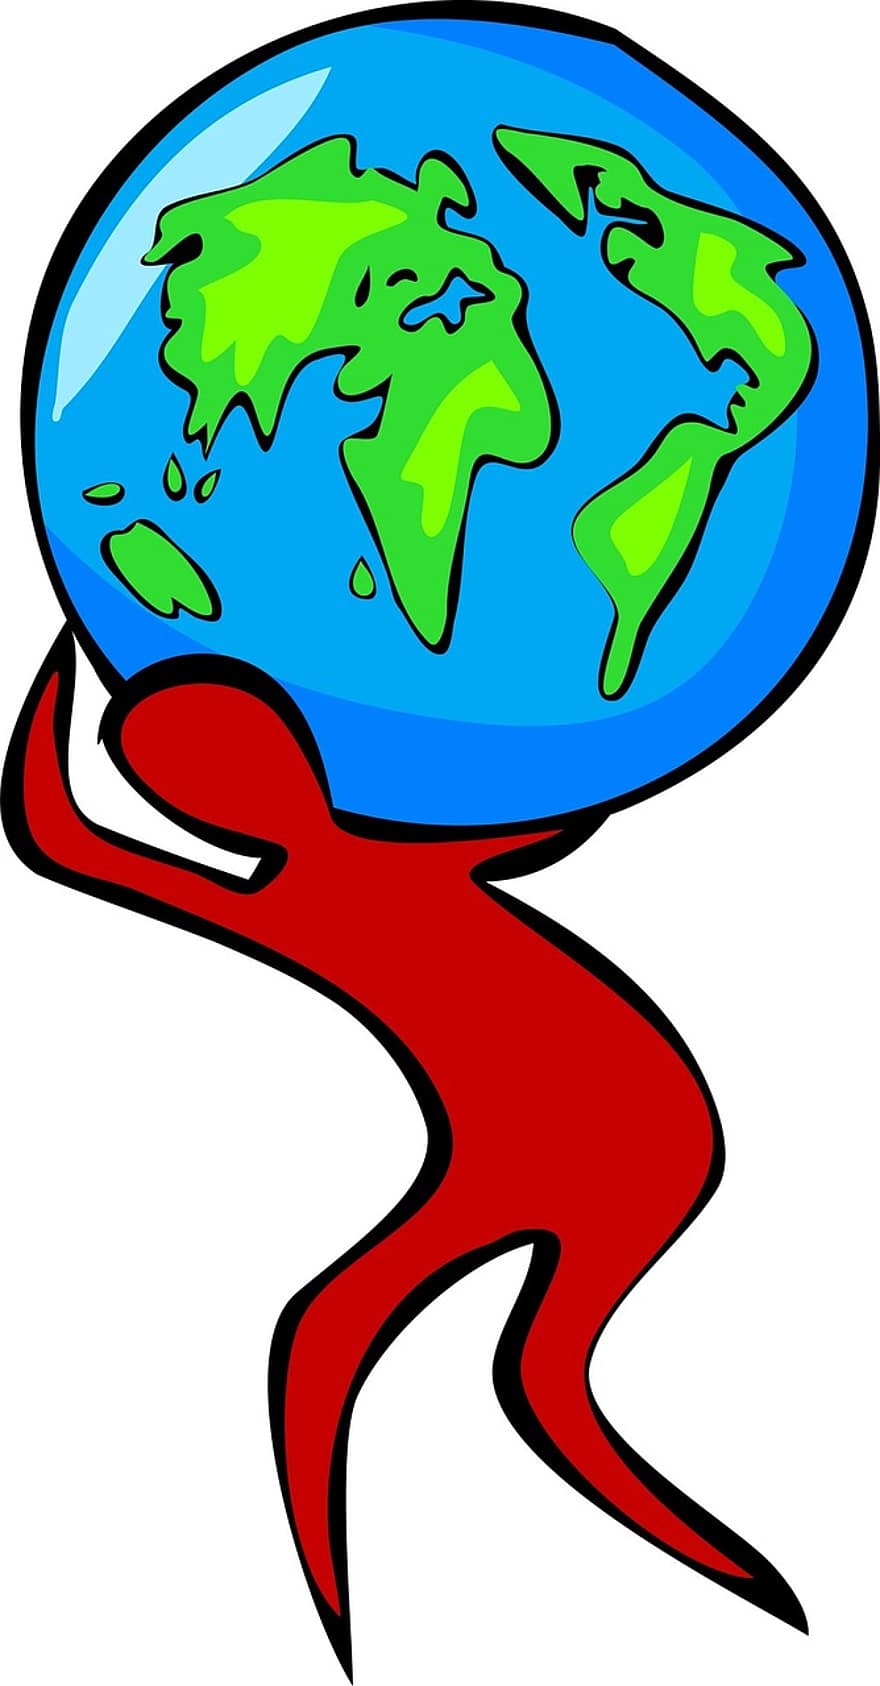 Welt, Globus, weltweit, www, global, Planet, Kugel, Symbol, Logo, gestalten, Kommunikation